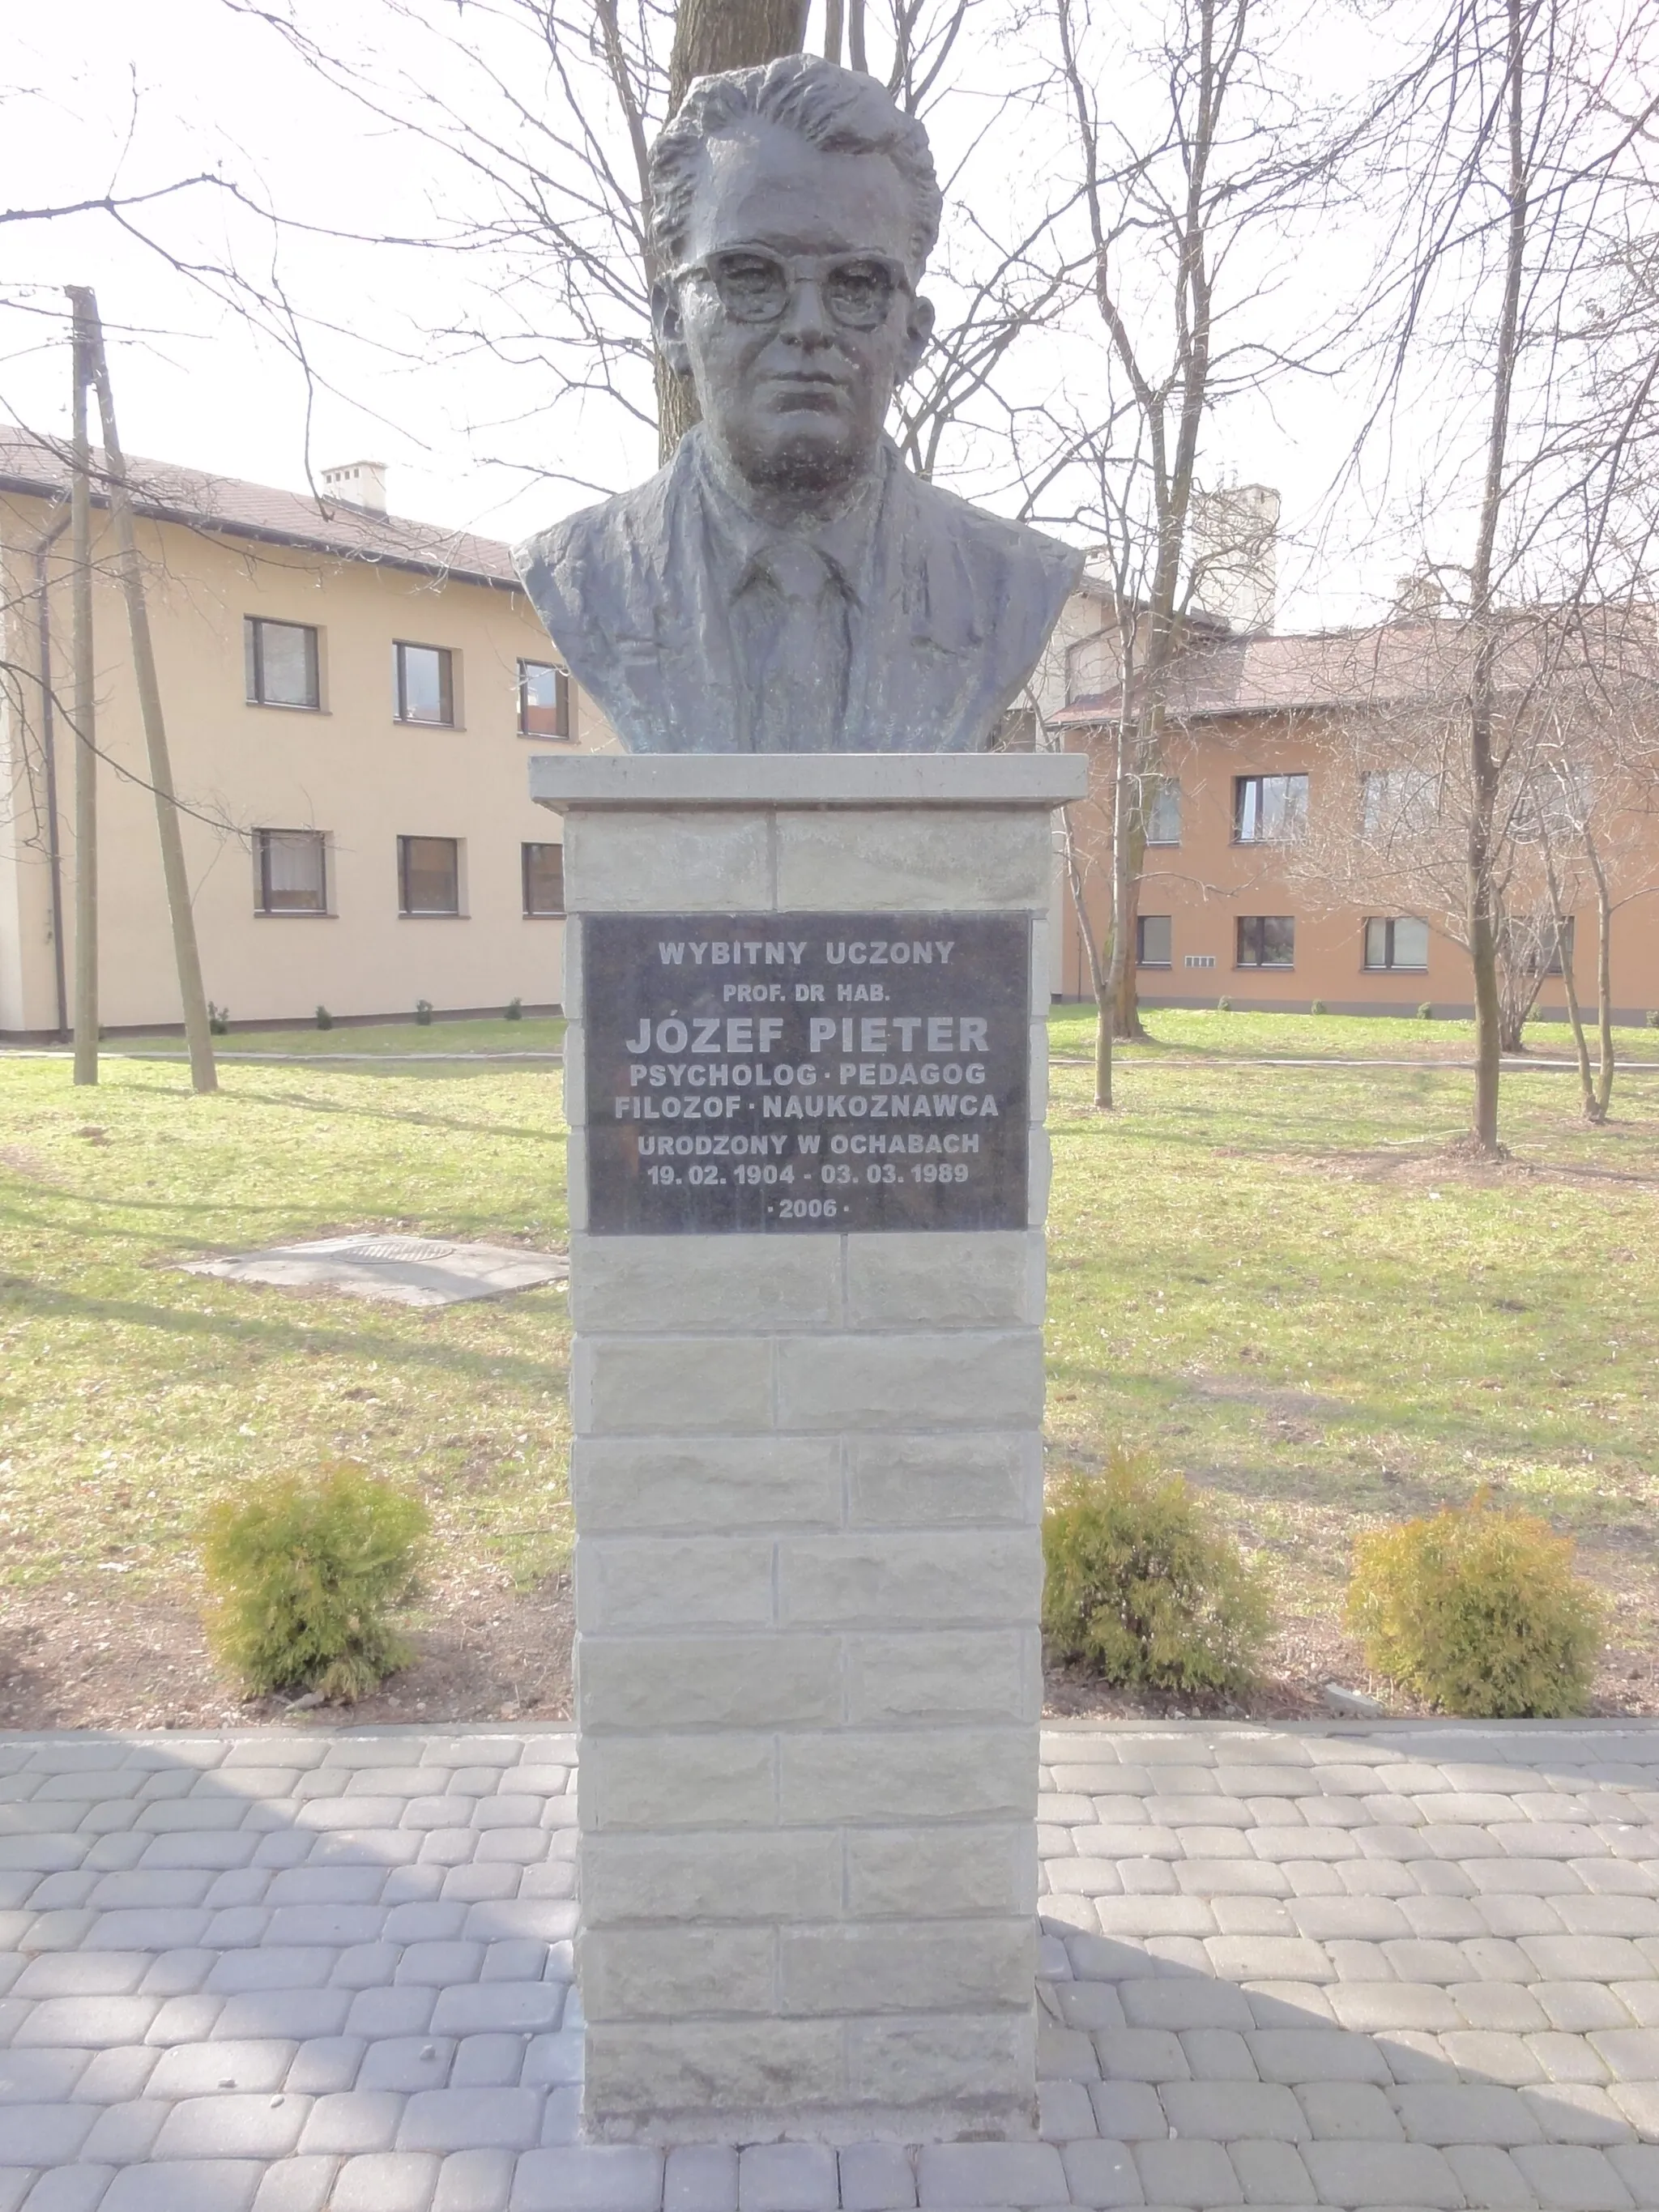 Photo showing: Józef Pieter monument in Ochaby